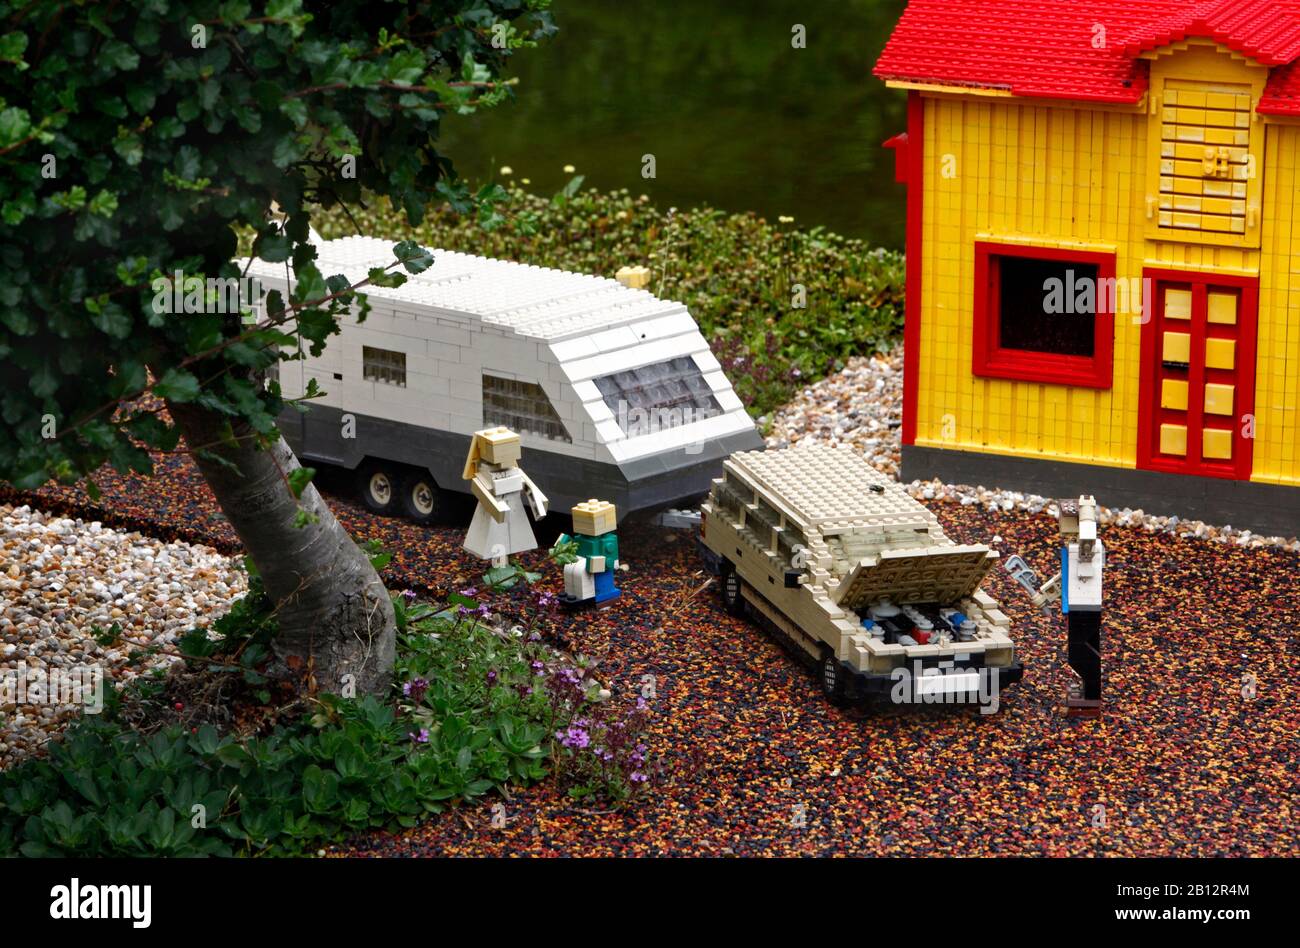 Children and adults in the Legoland amusement park in Billund, Denmark. The picture: Villa, Volvo and caravan symbolize Sweden.  Photo Jeppe Gustafsson Stock Photo